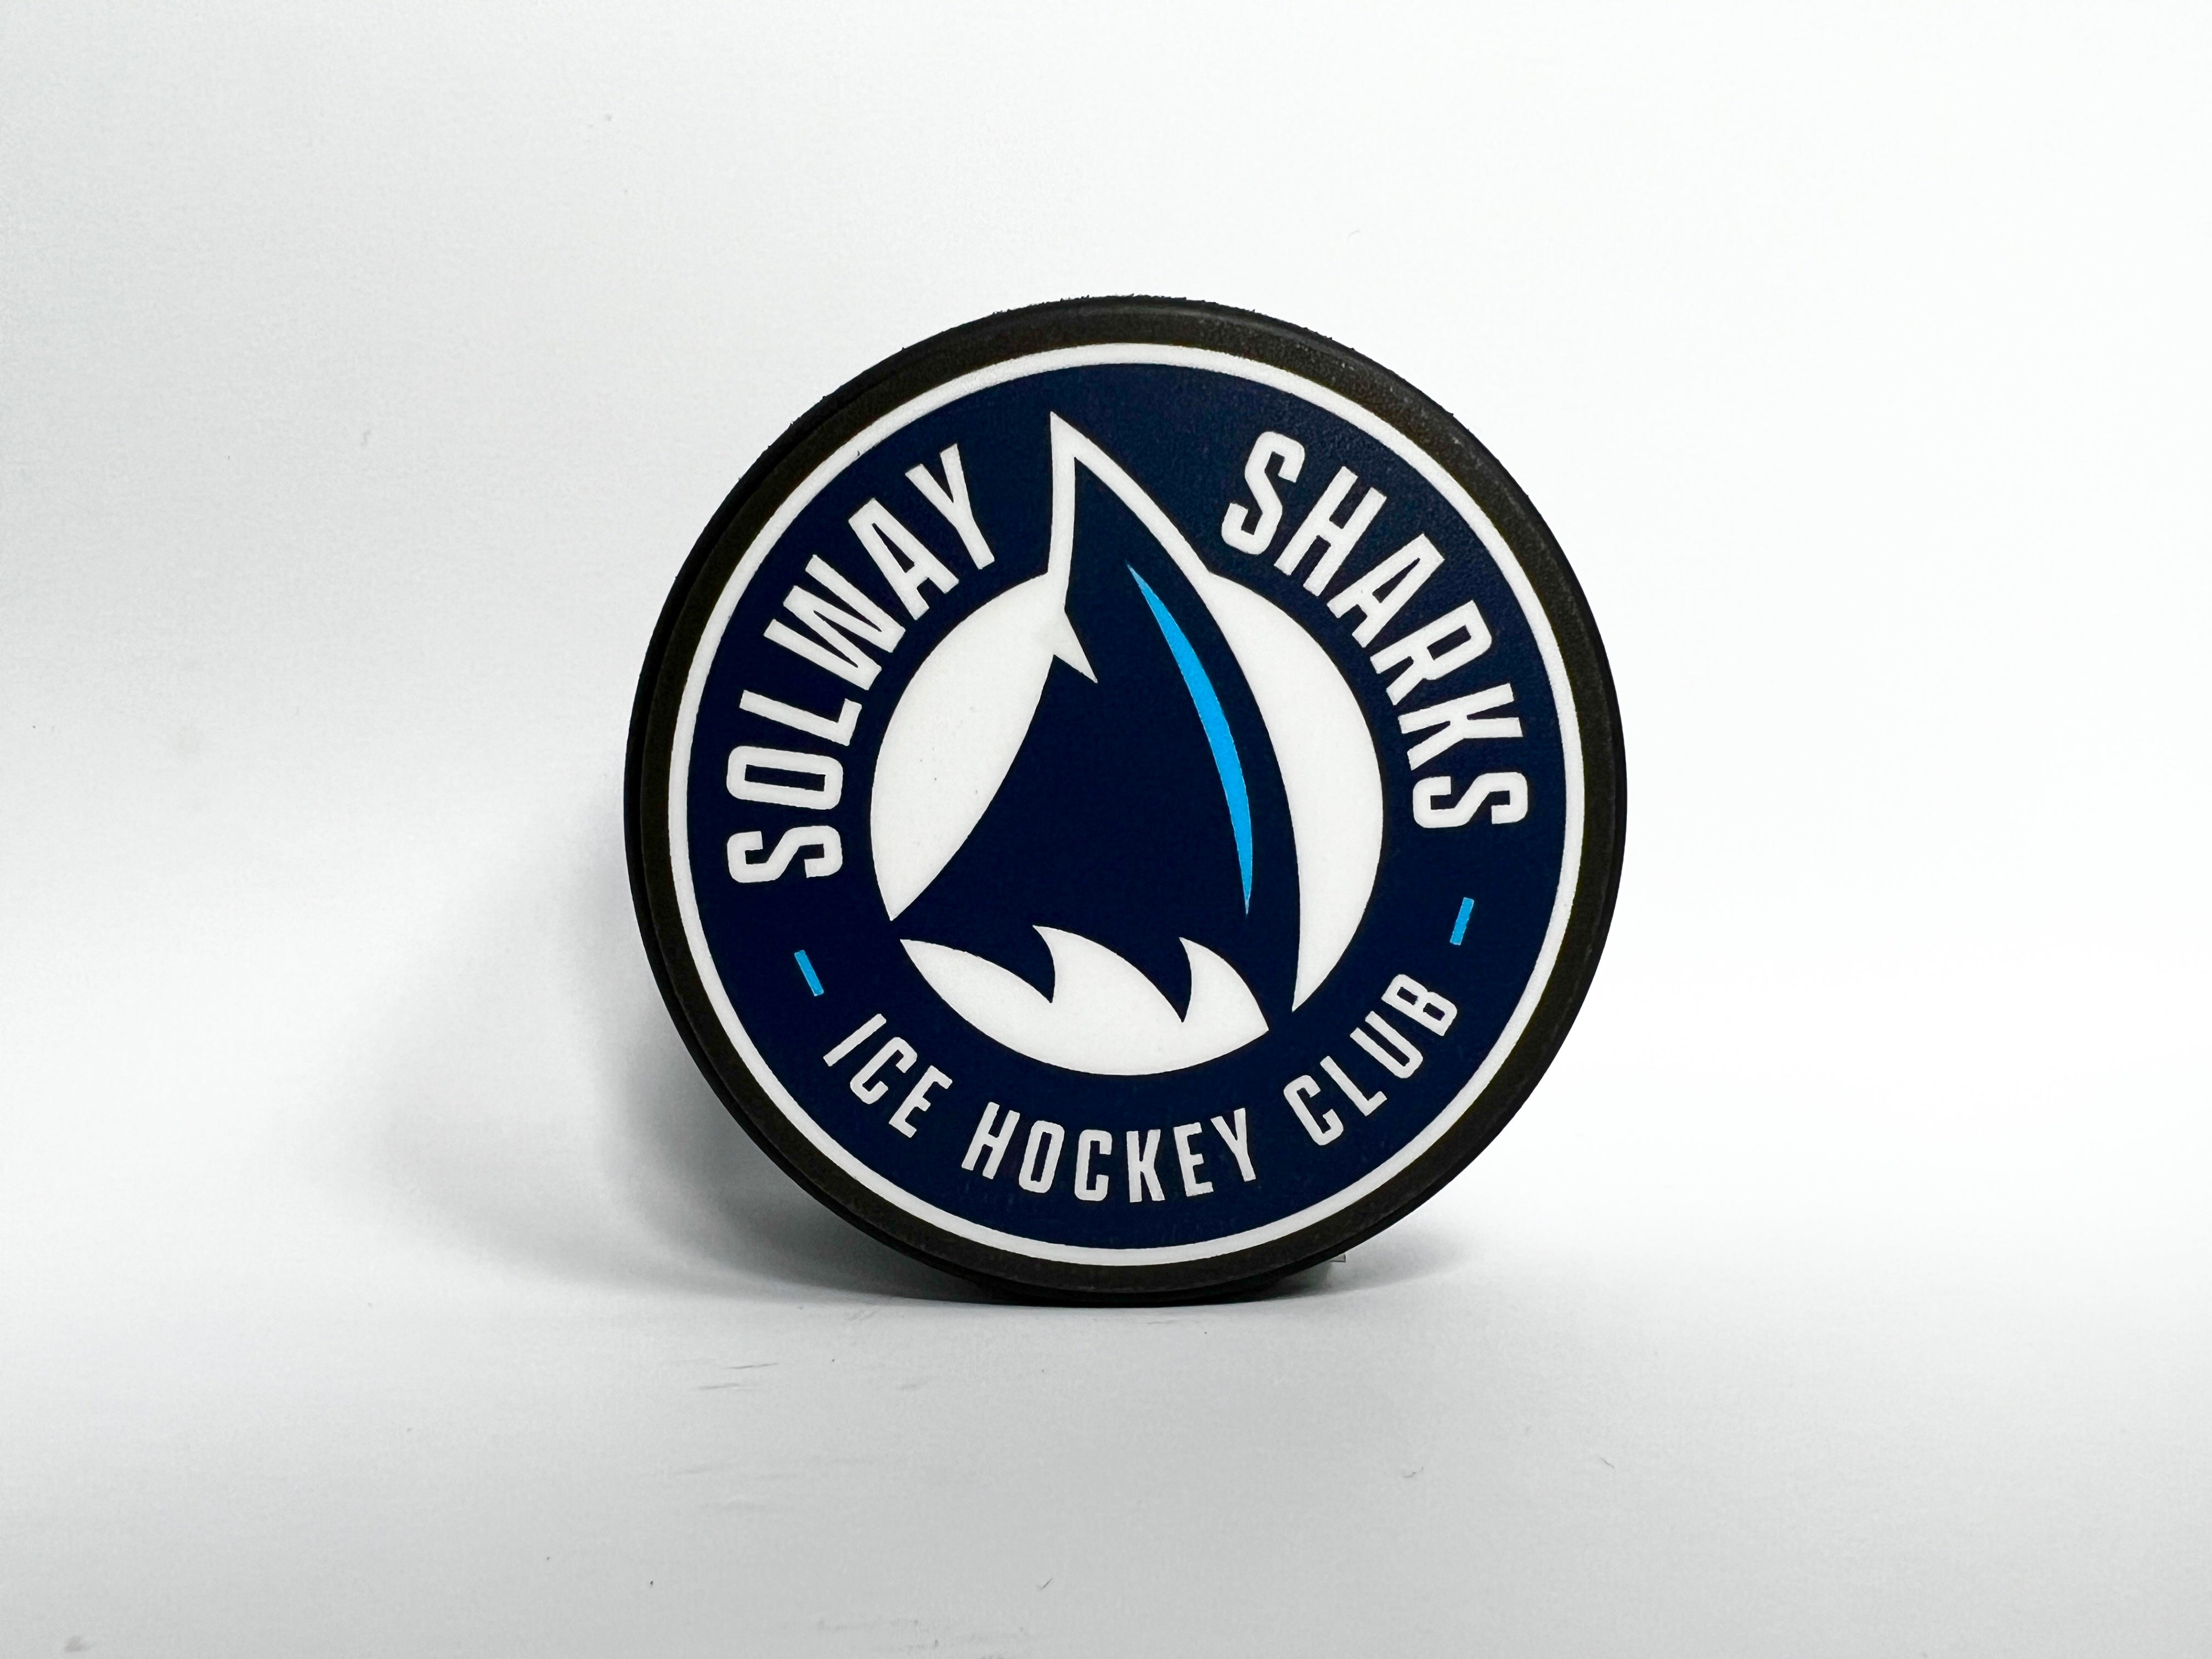 Sharks Official Logo Pucks